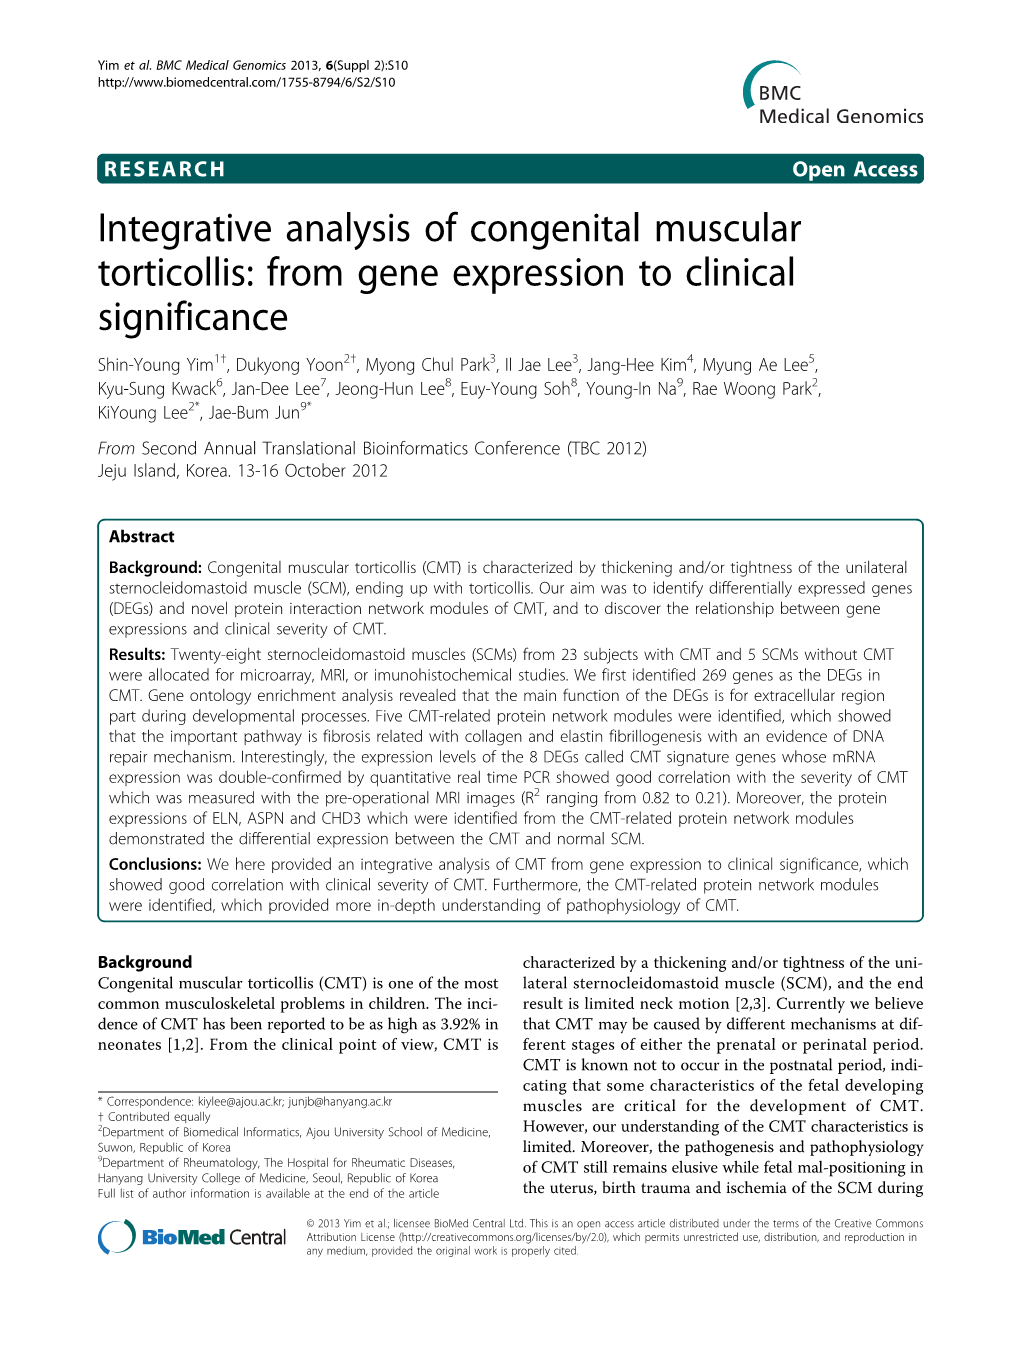 Integrative Analysis of Congenital Muscular Torticollis: from Gene